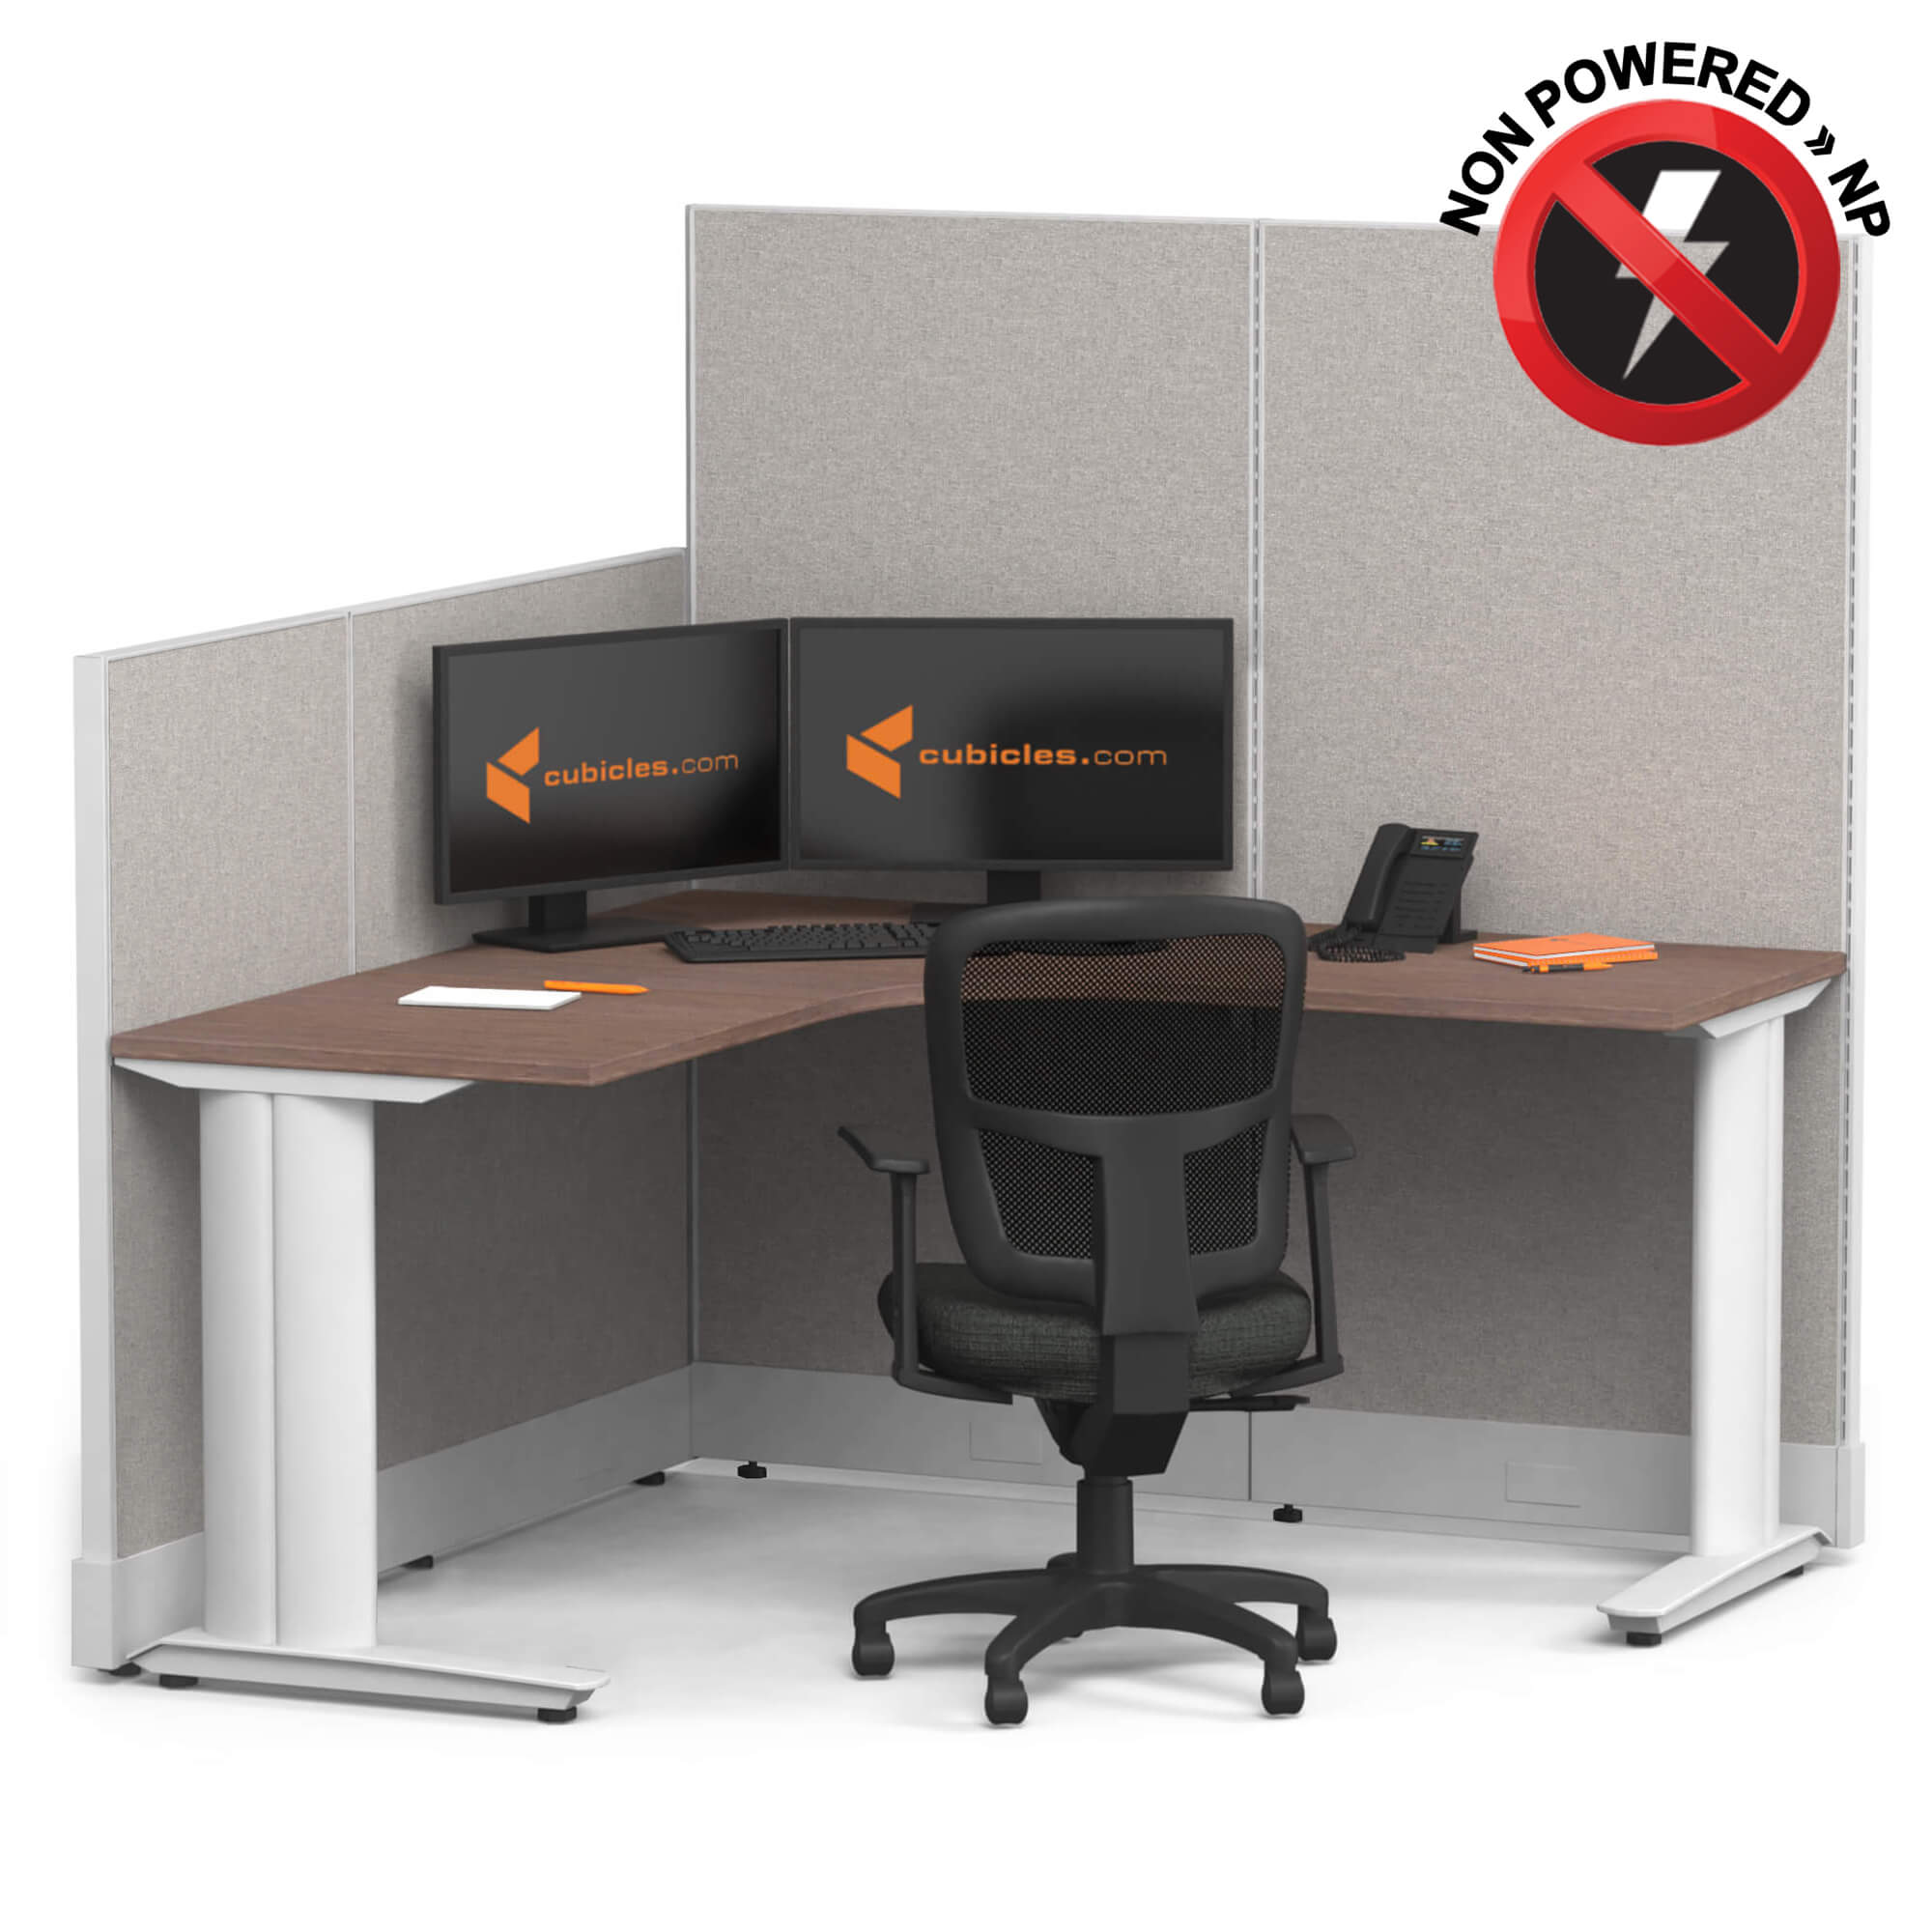 cubicle-desk-l-shaped-workstation-non-powered-sign.jpg